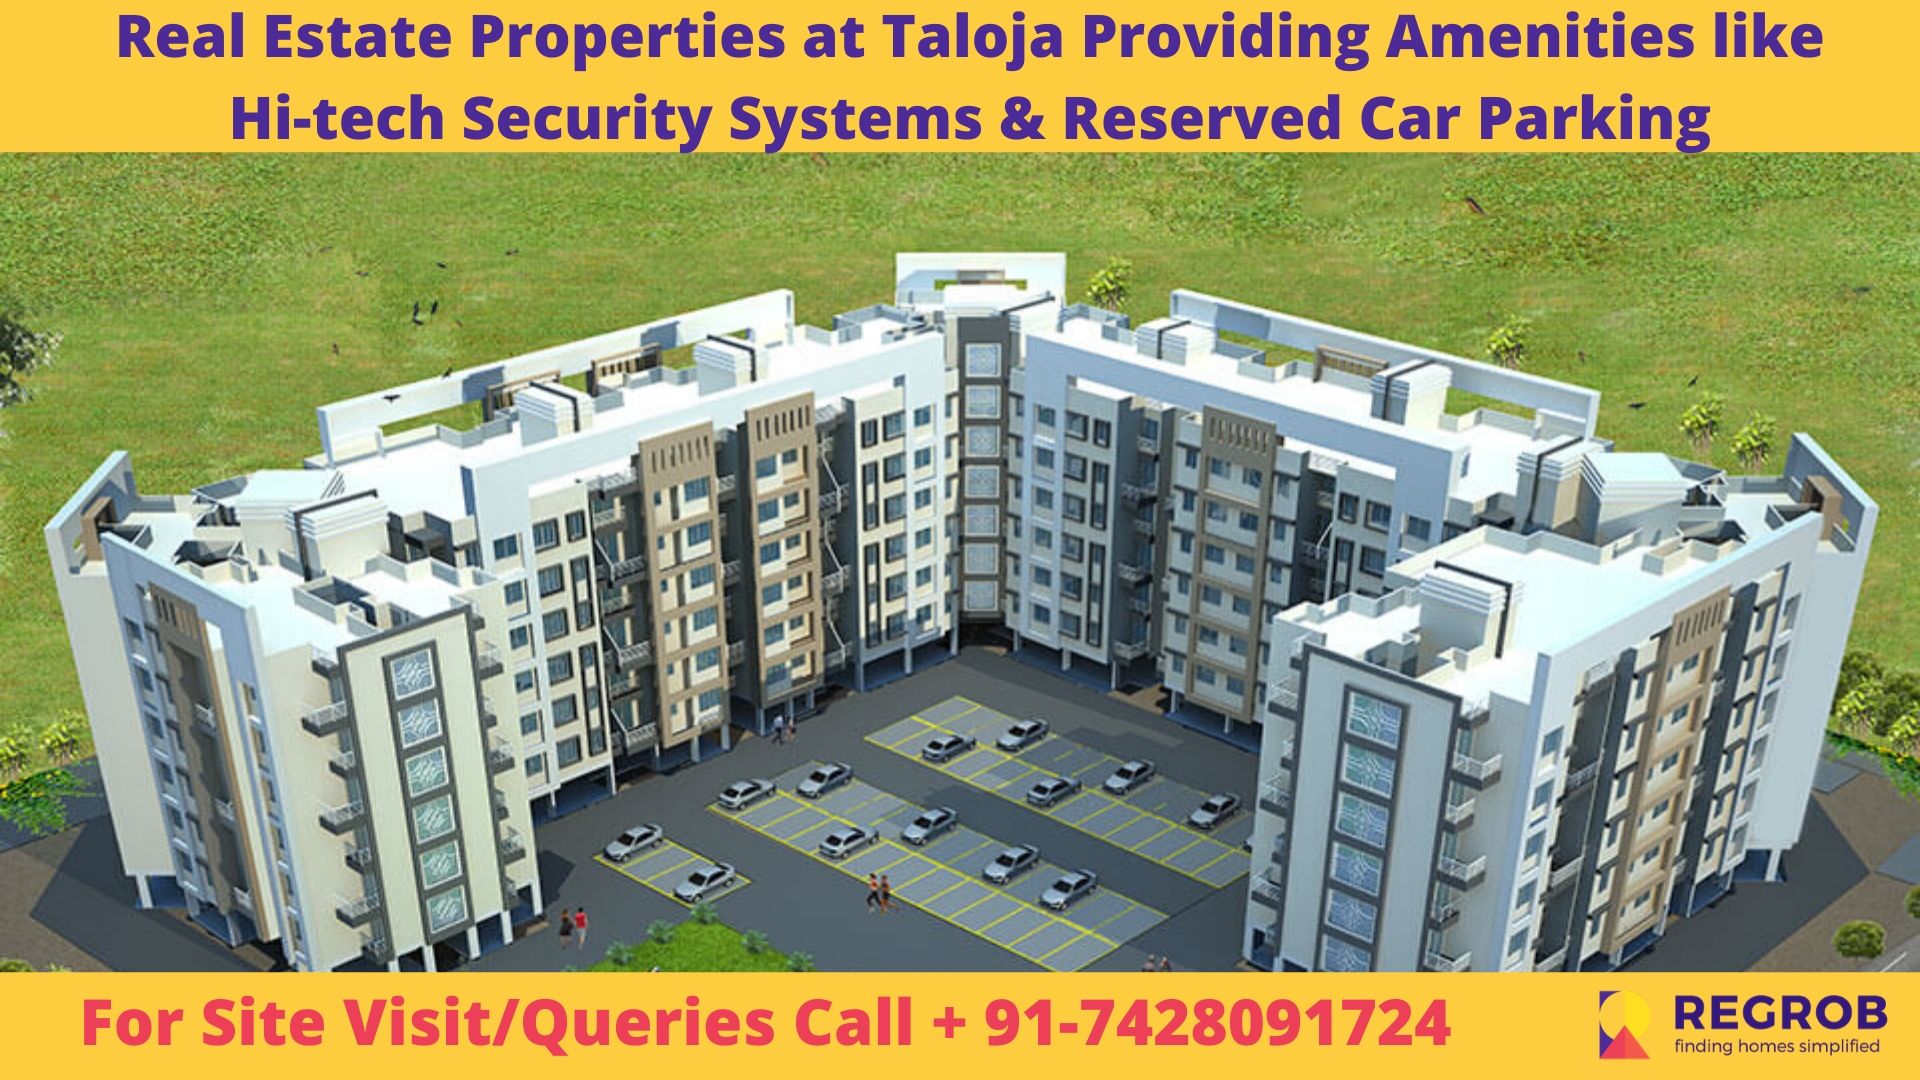 Real Estate Properties at Taloja Providing Modern Amenities